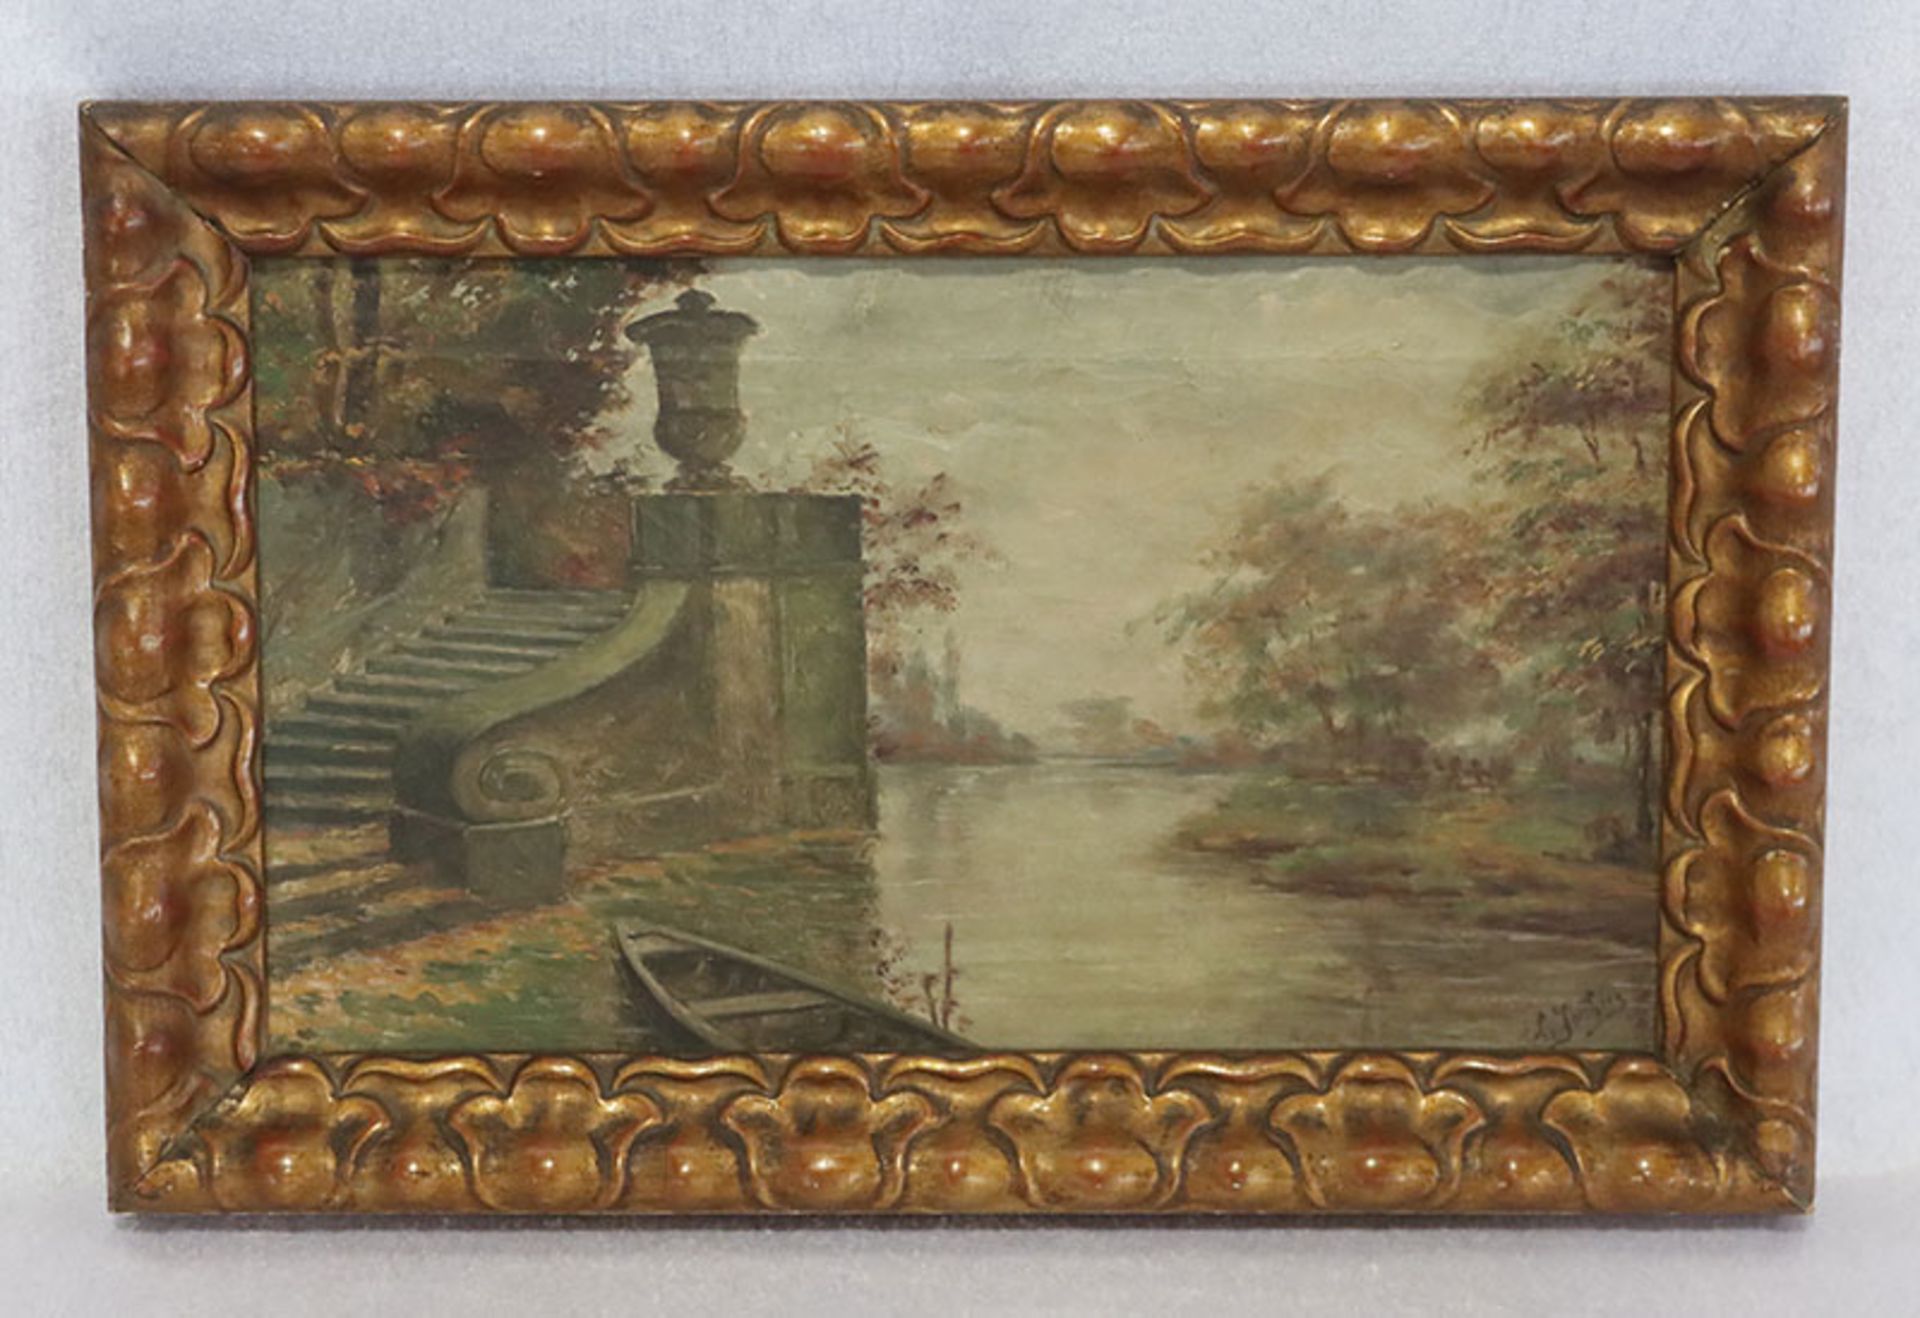 Gemälde ÖL/LW 'Ufer-Szenerie mit Boot', signiert L. Jothin ?, Bildoberfläche krakeliert, gerahmt,